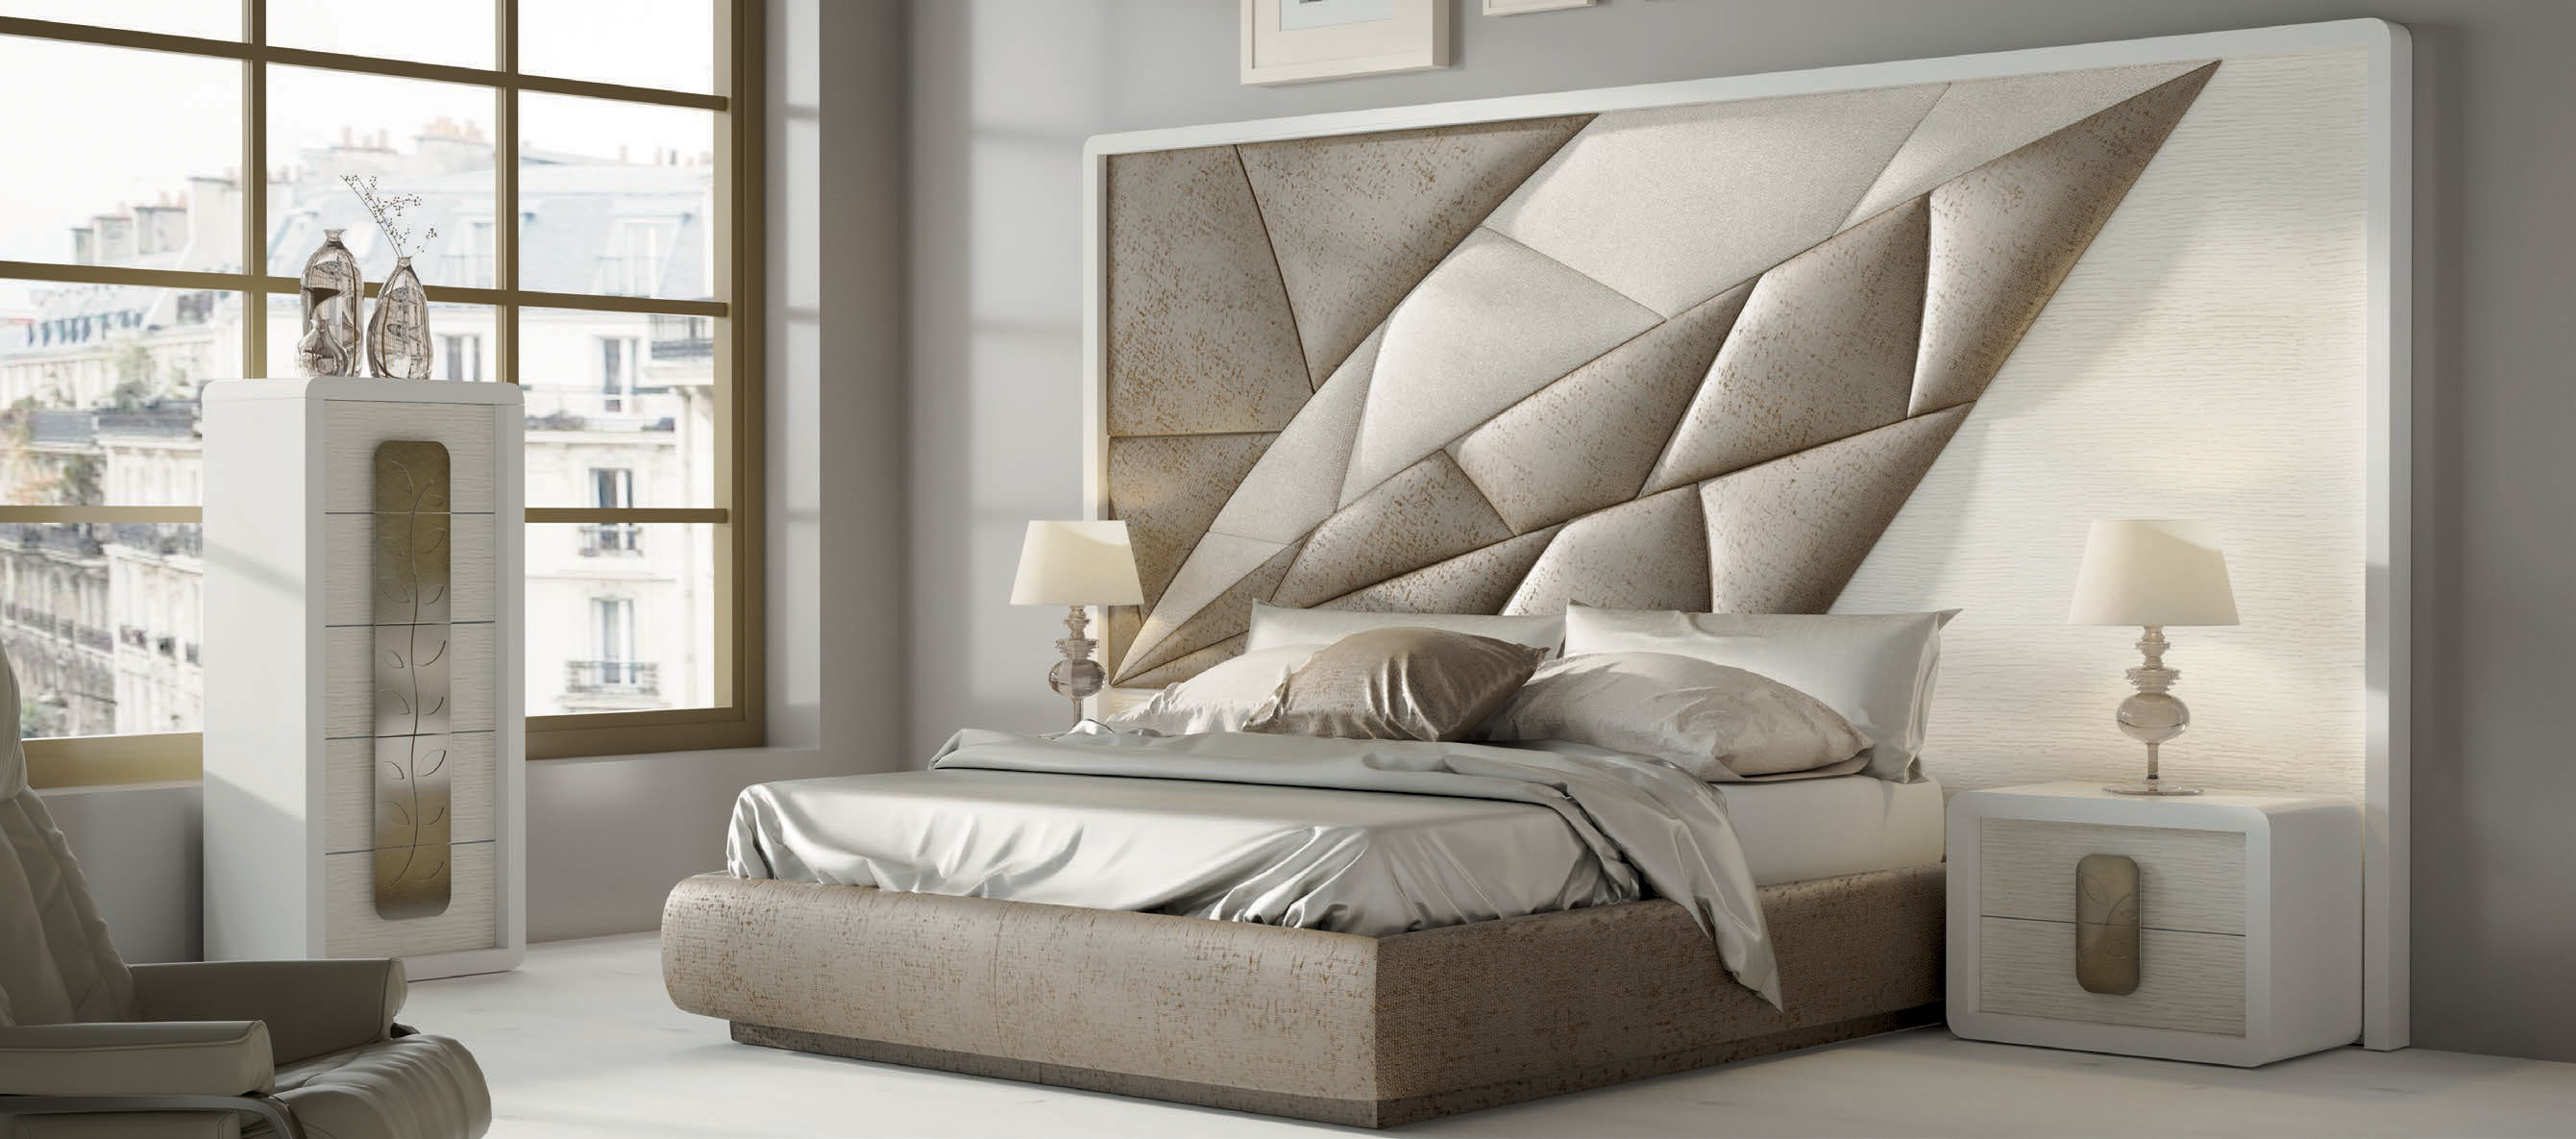 Brands Franco Furniture Bedrooms vol1, Spain DOR 166